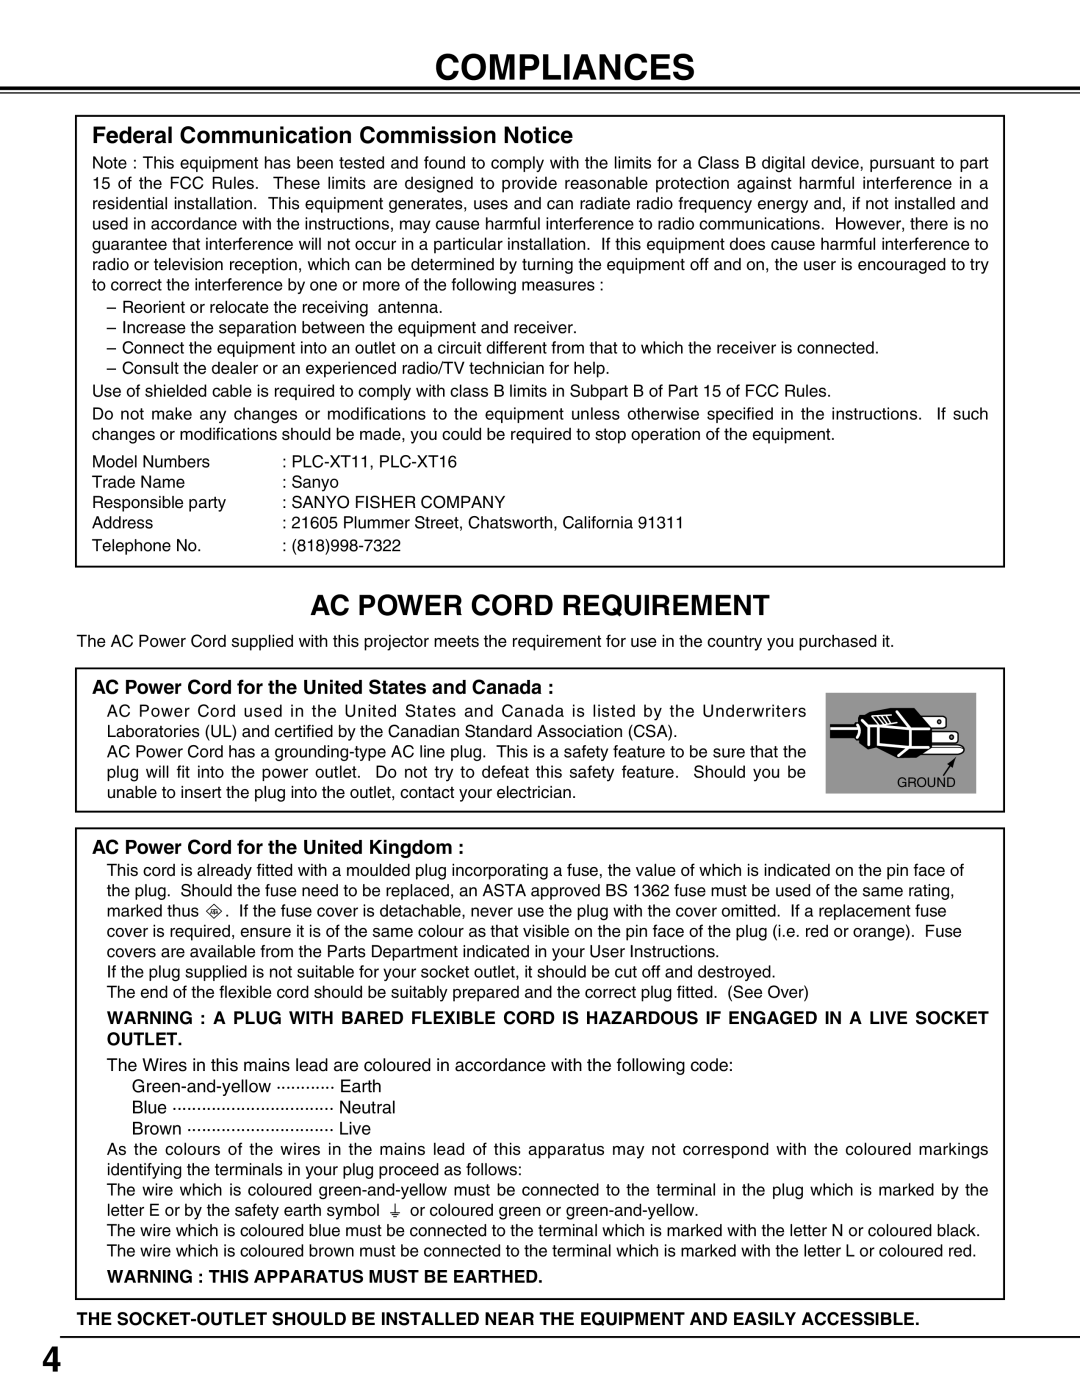 Sanyo PLC-XT11, PLC-XT16 owner manual Compliances, Ac Power Cord Requirement, Federal Communication Commission Notice 